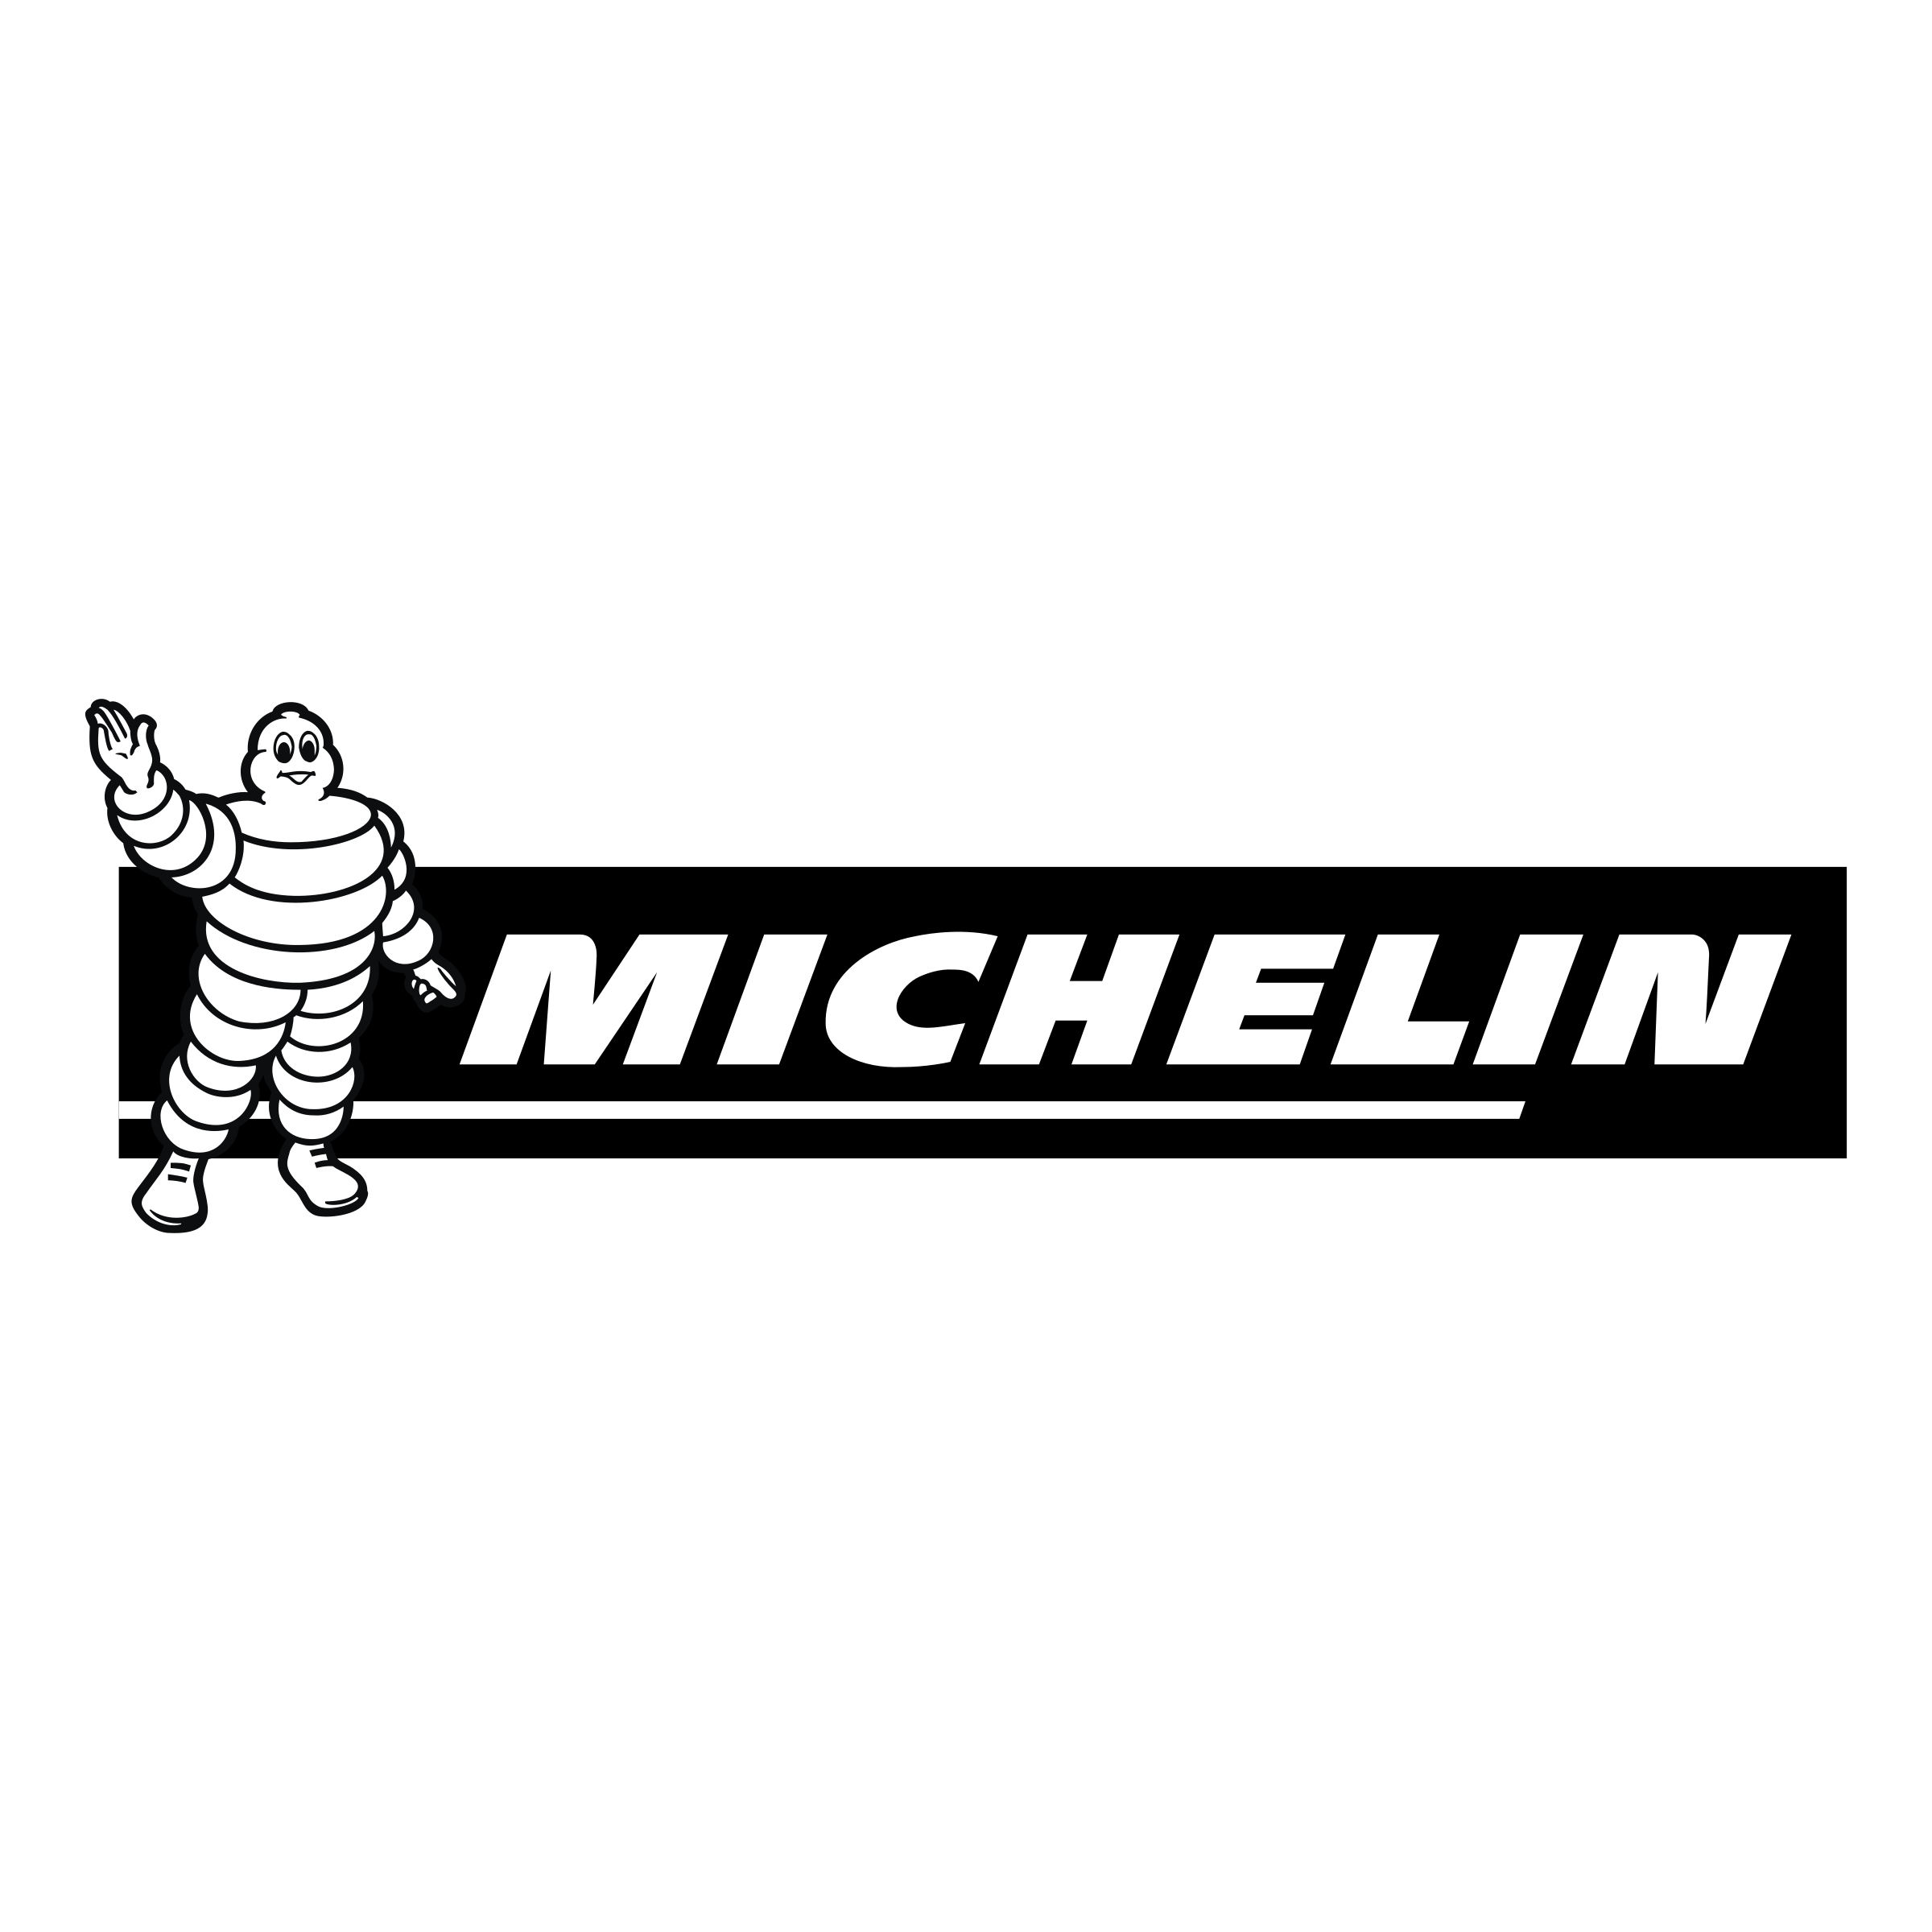 Michelin Logo PNG Transparent & SVG Vector.